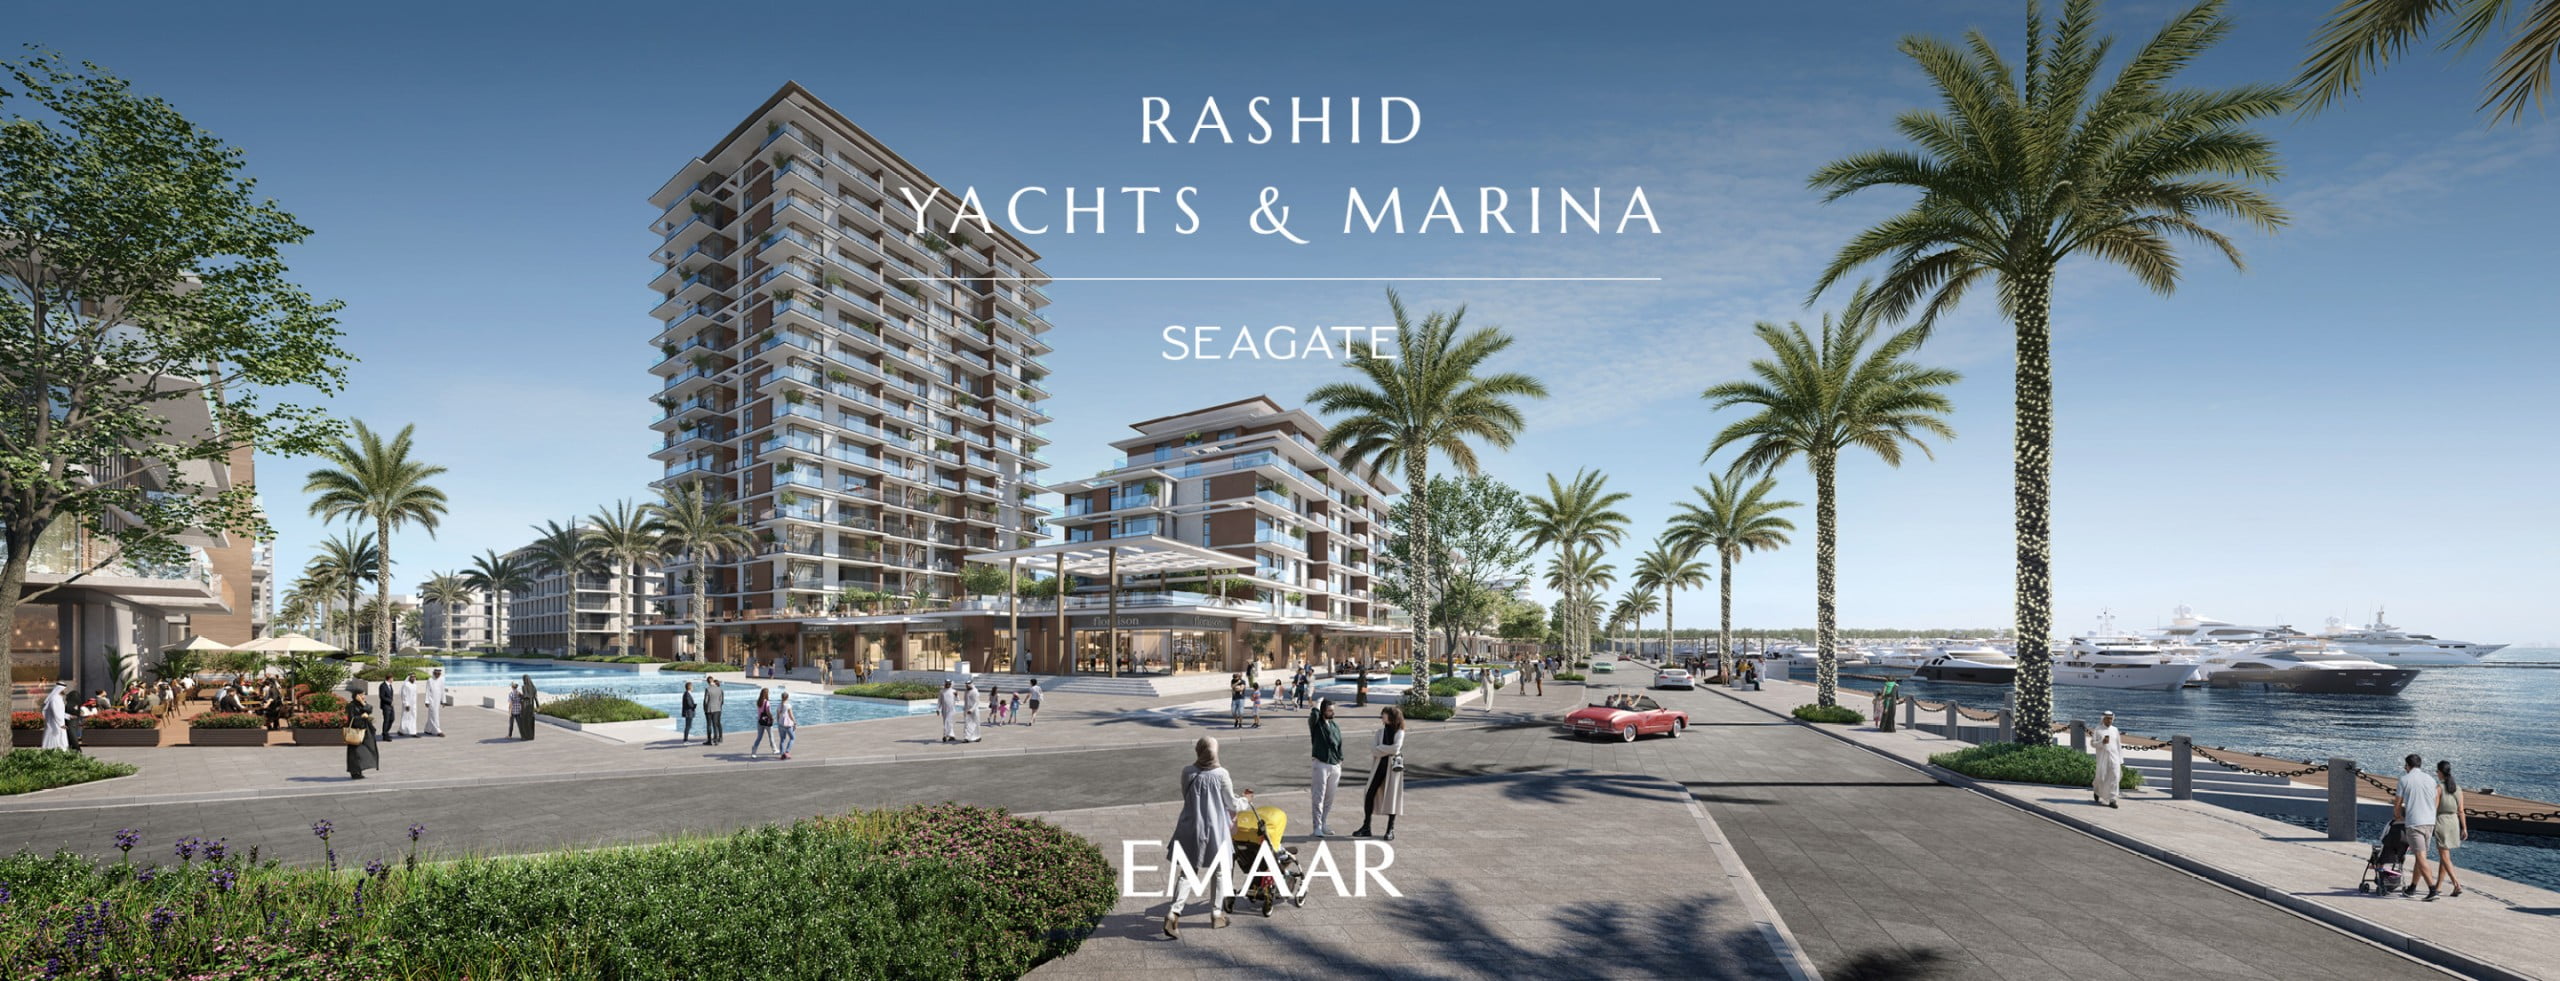 SEAGATE RYM EMAAR 4 scaled - Immobilier Dubai